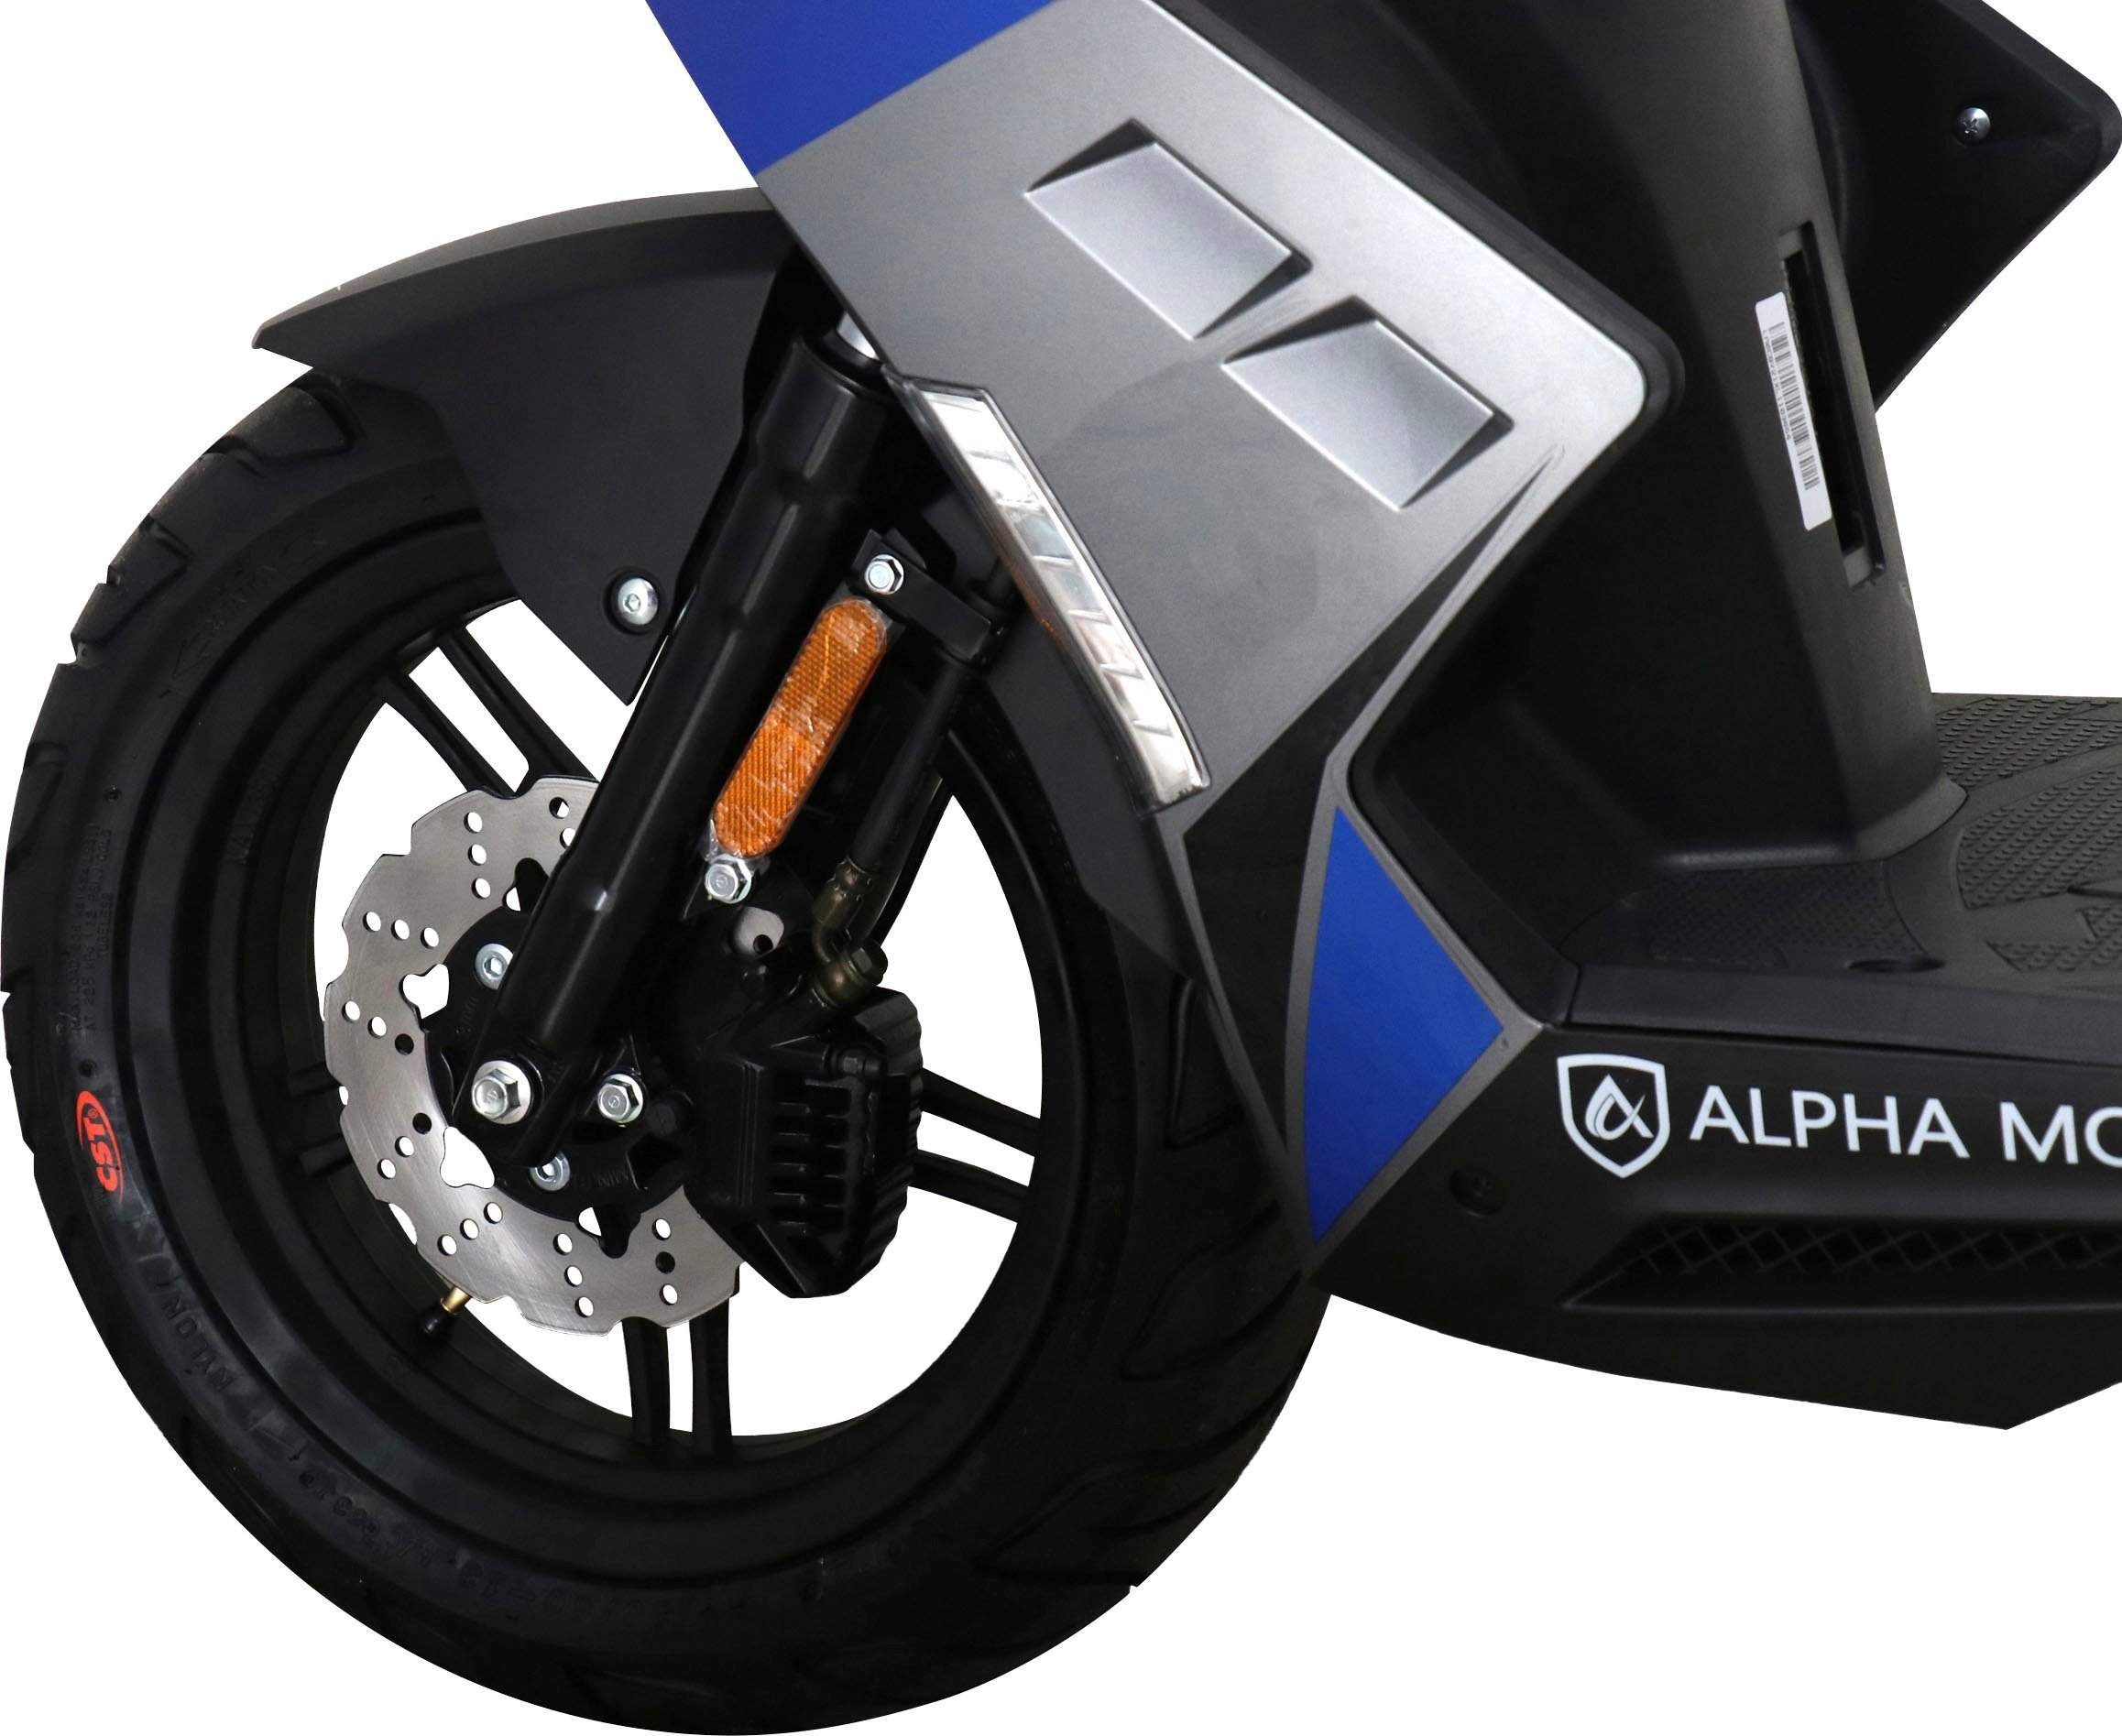 Alpha Motors Motorroller Mustang FI, Euro blau-grau km/h, 45 ccm, 5 50